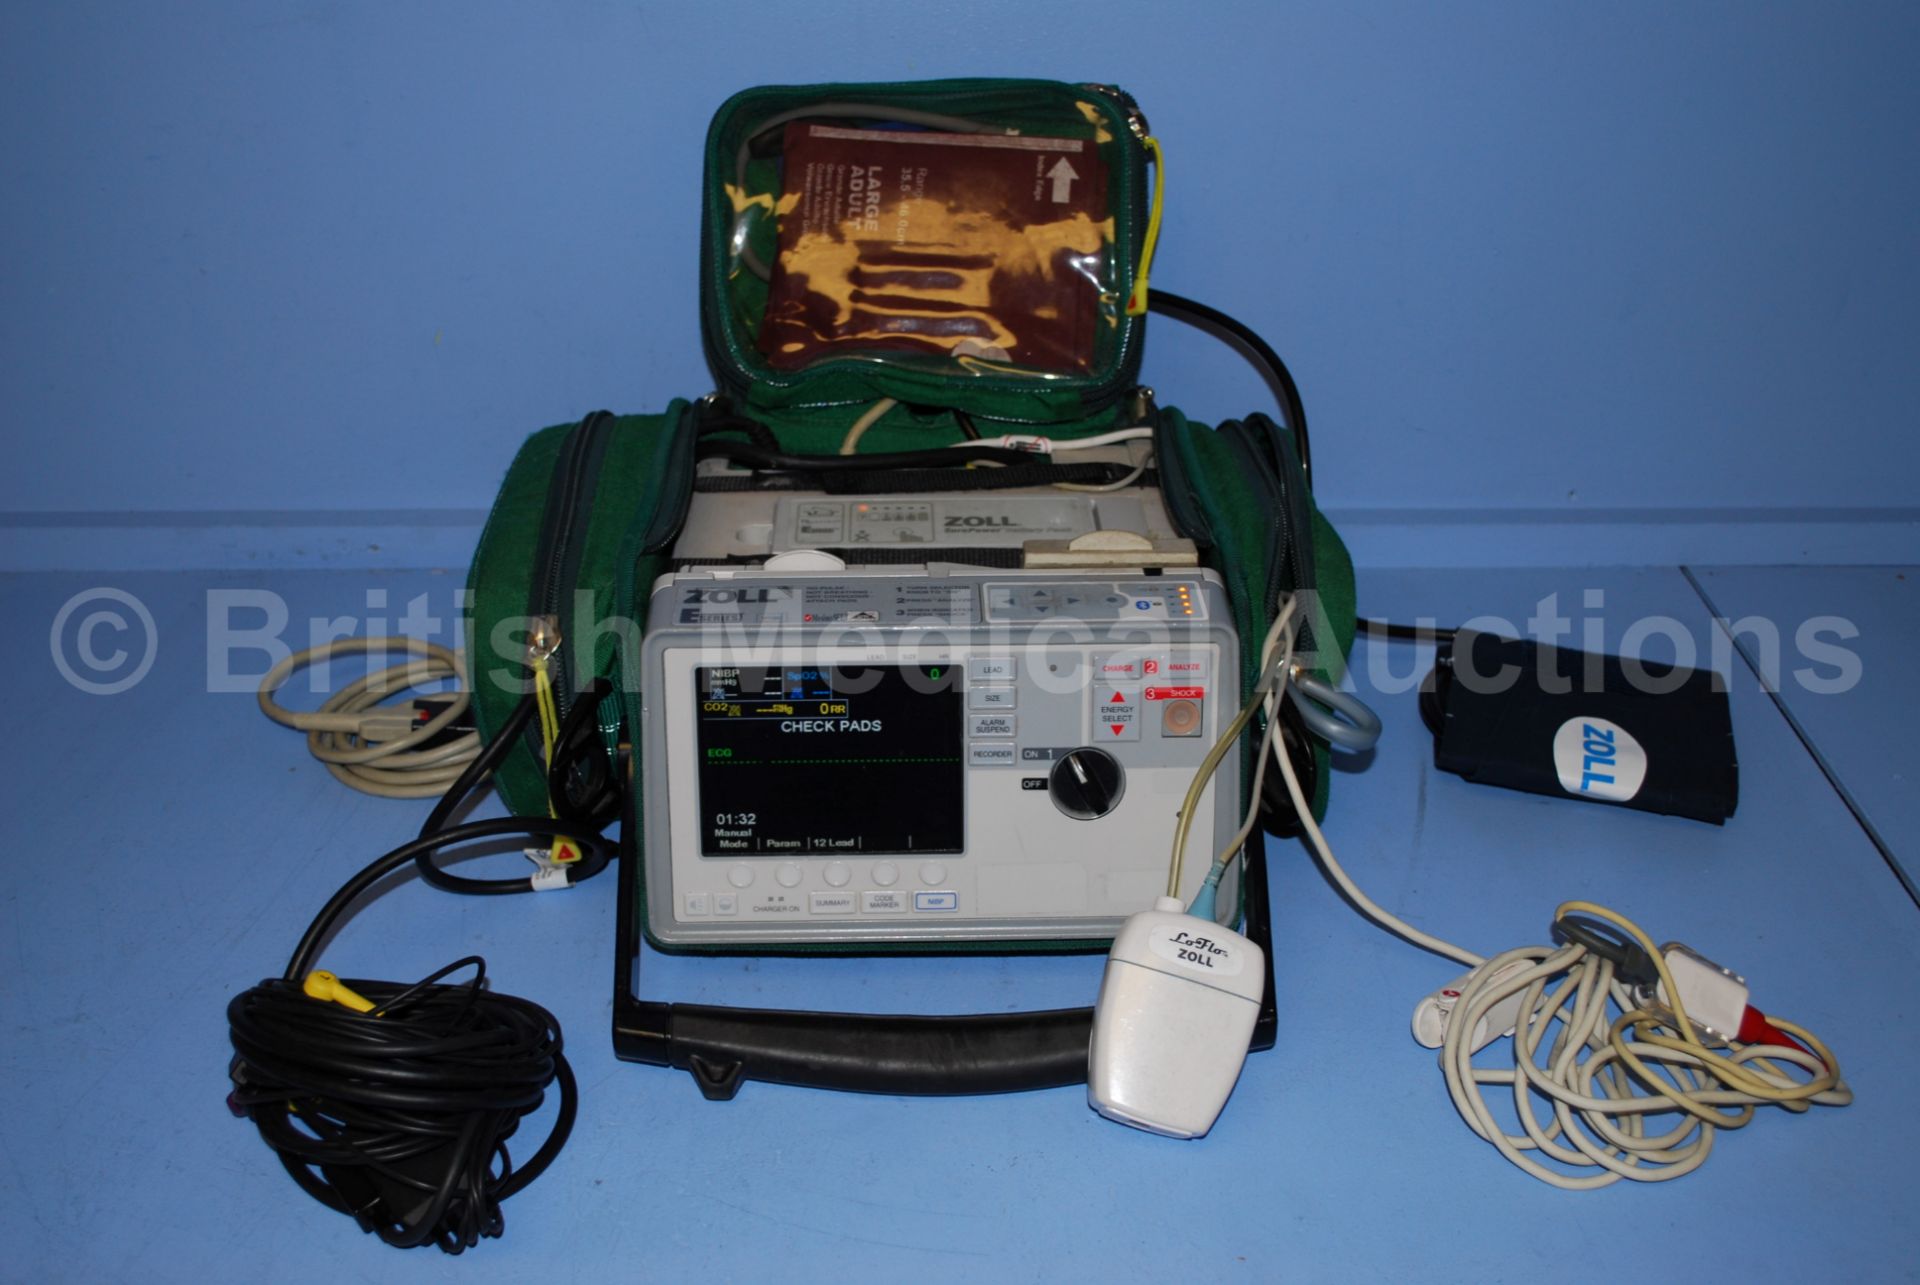 Zoll E Series Defibrillator with Bluetooth, ECG, S